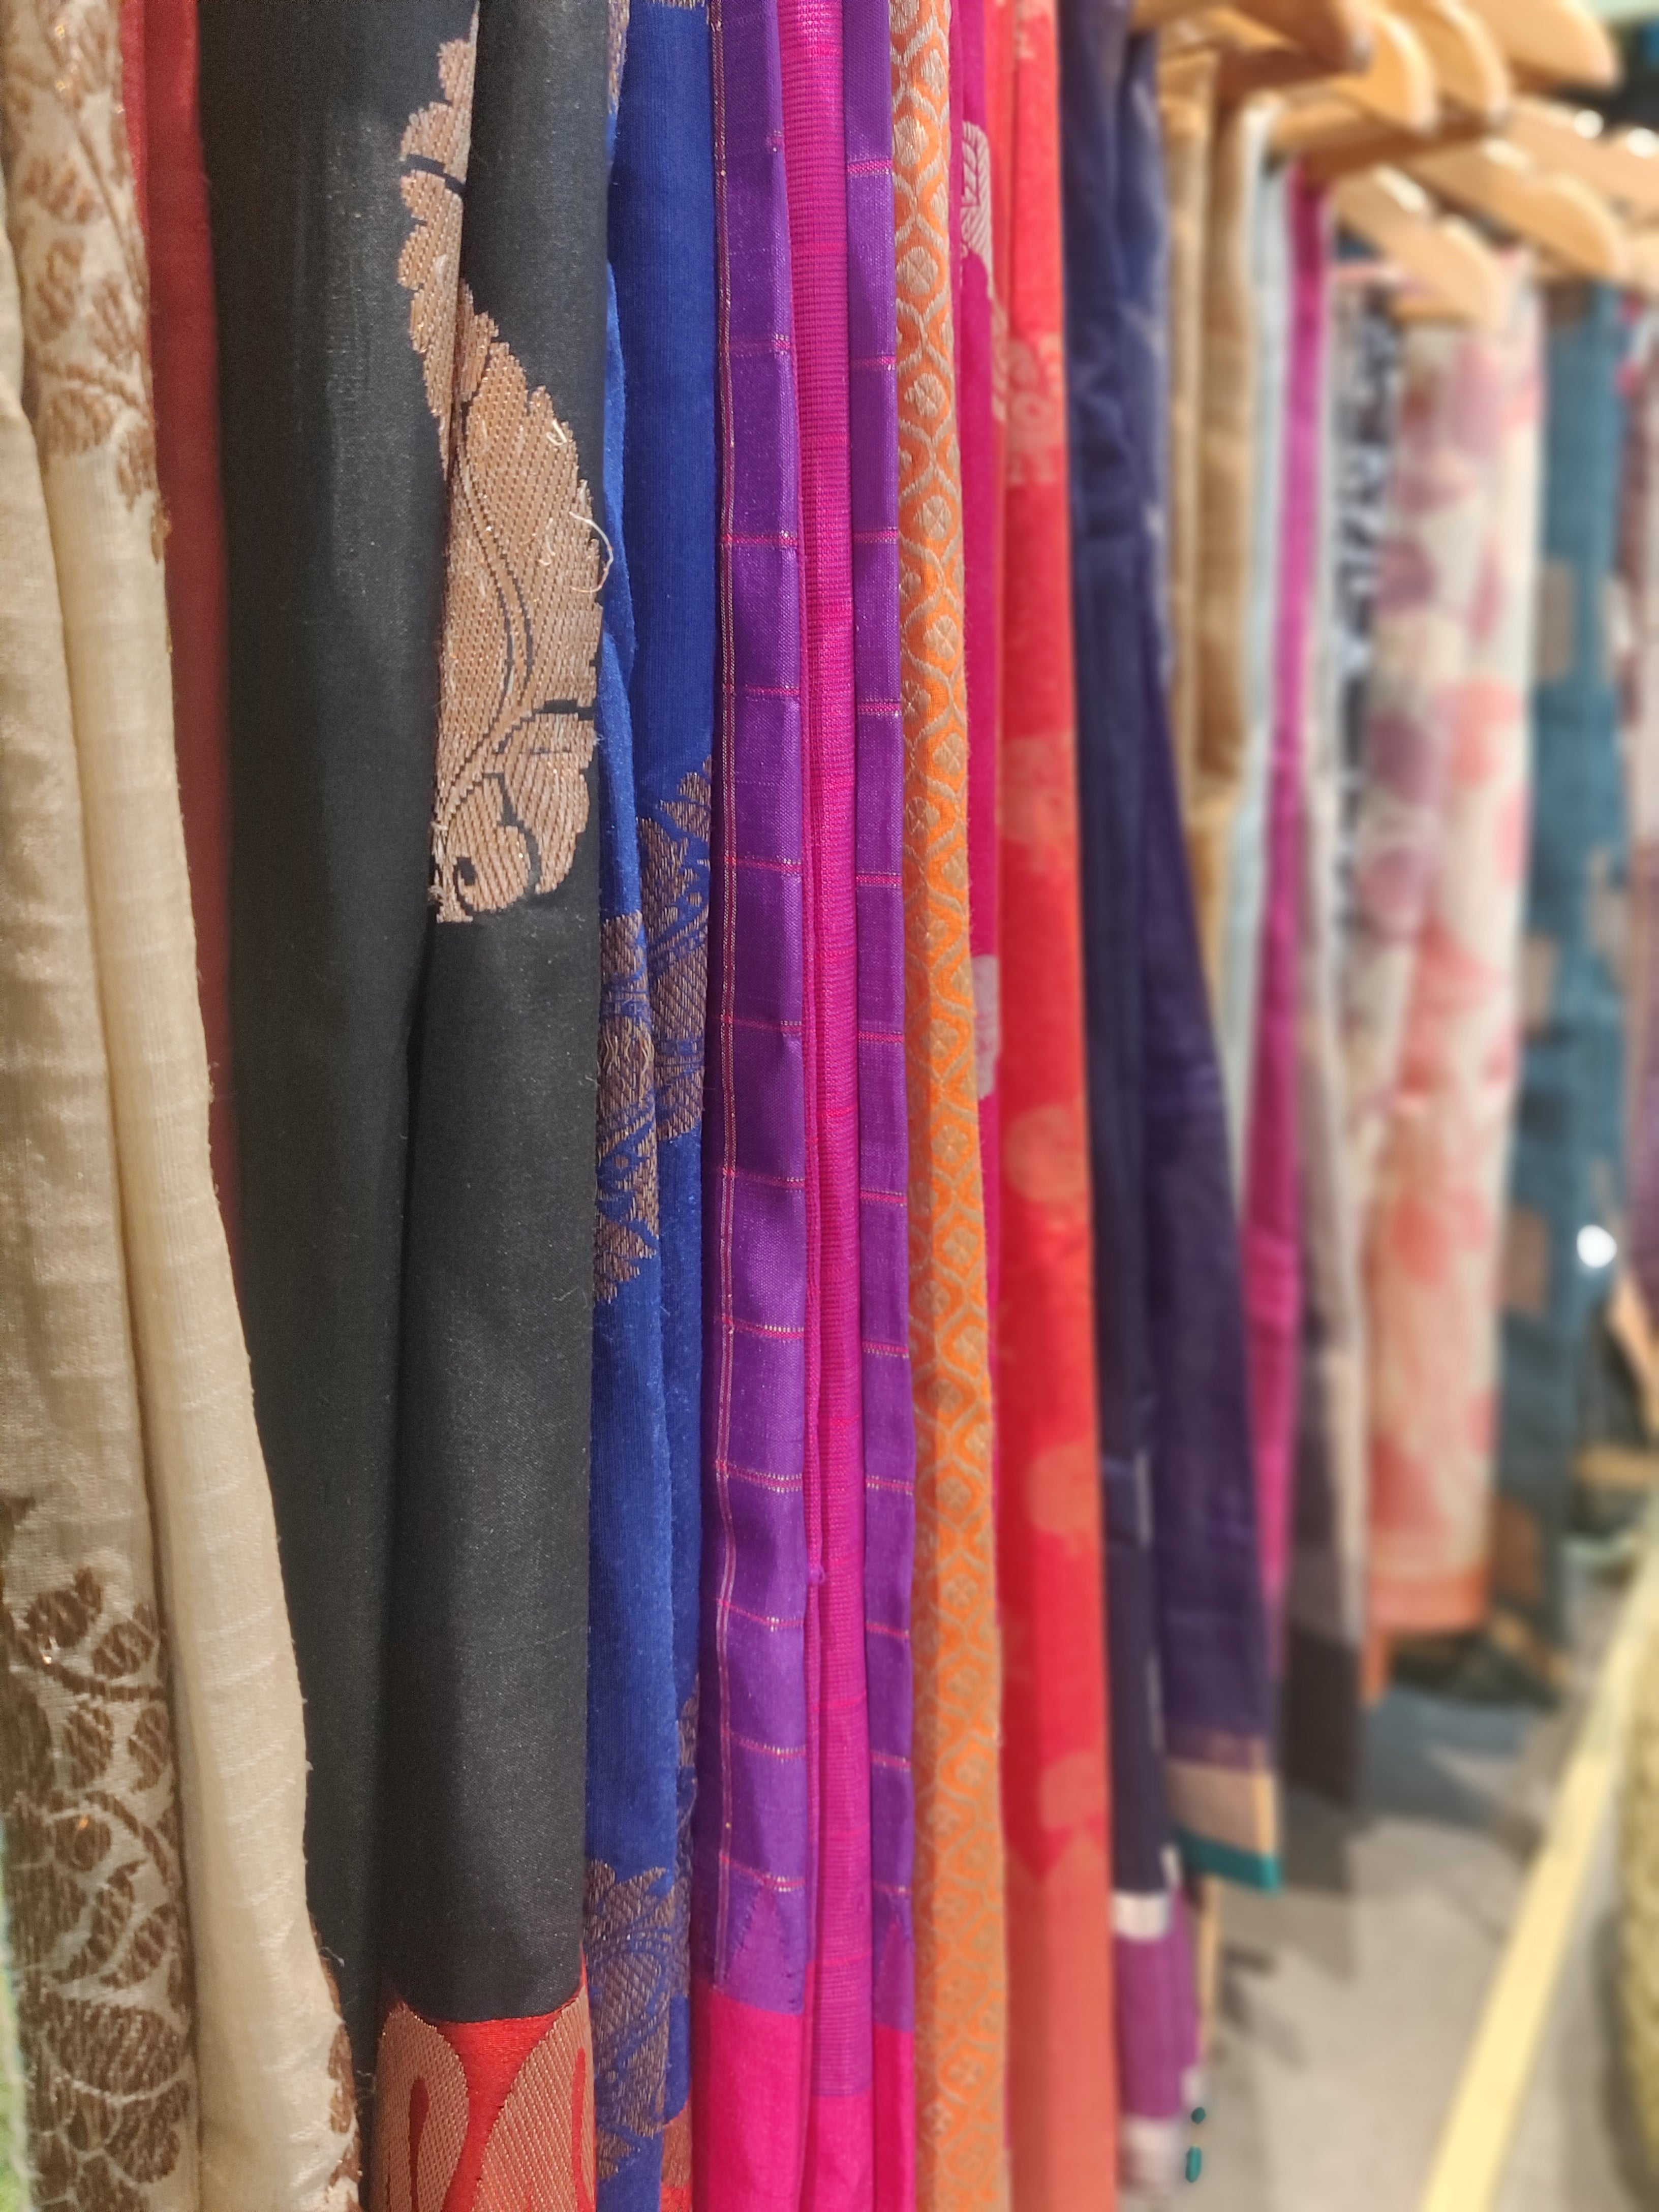 Handloom Saris from Bhagalpur Weaving, Varanasi Weaving, Jamdani, Ajrakh Block Print, Bhandhni, Dhakai Jamdani, Bagh Block Print, Bagru Block Print